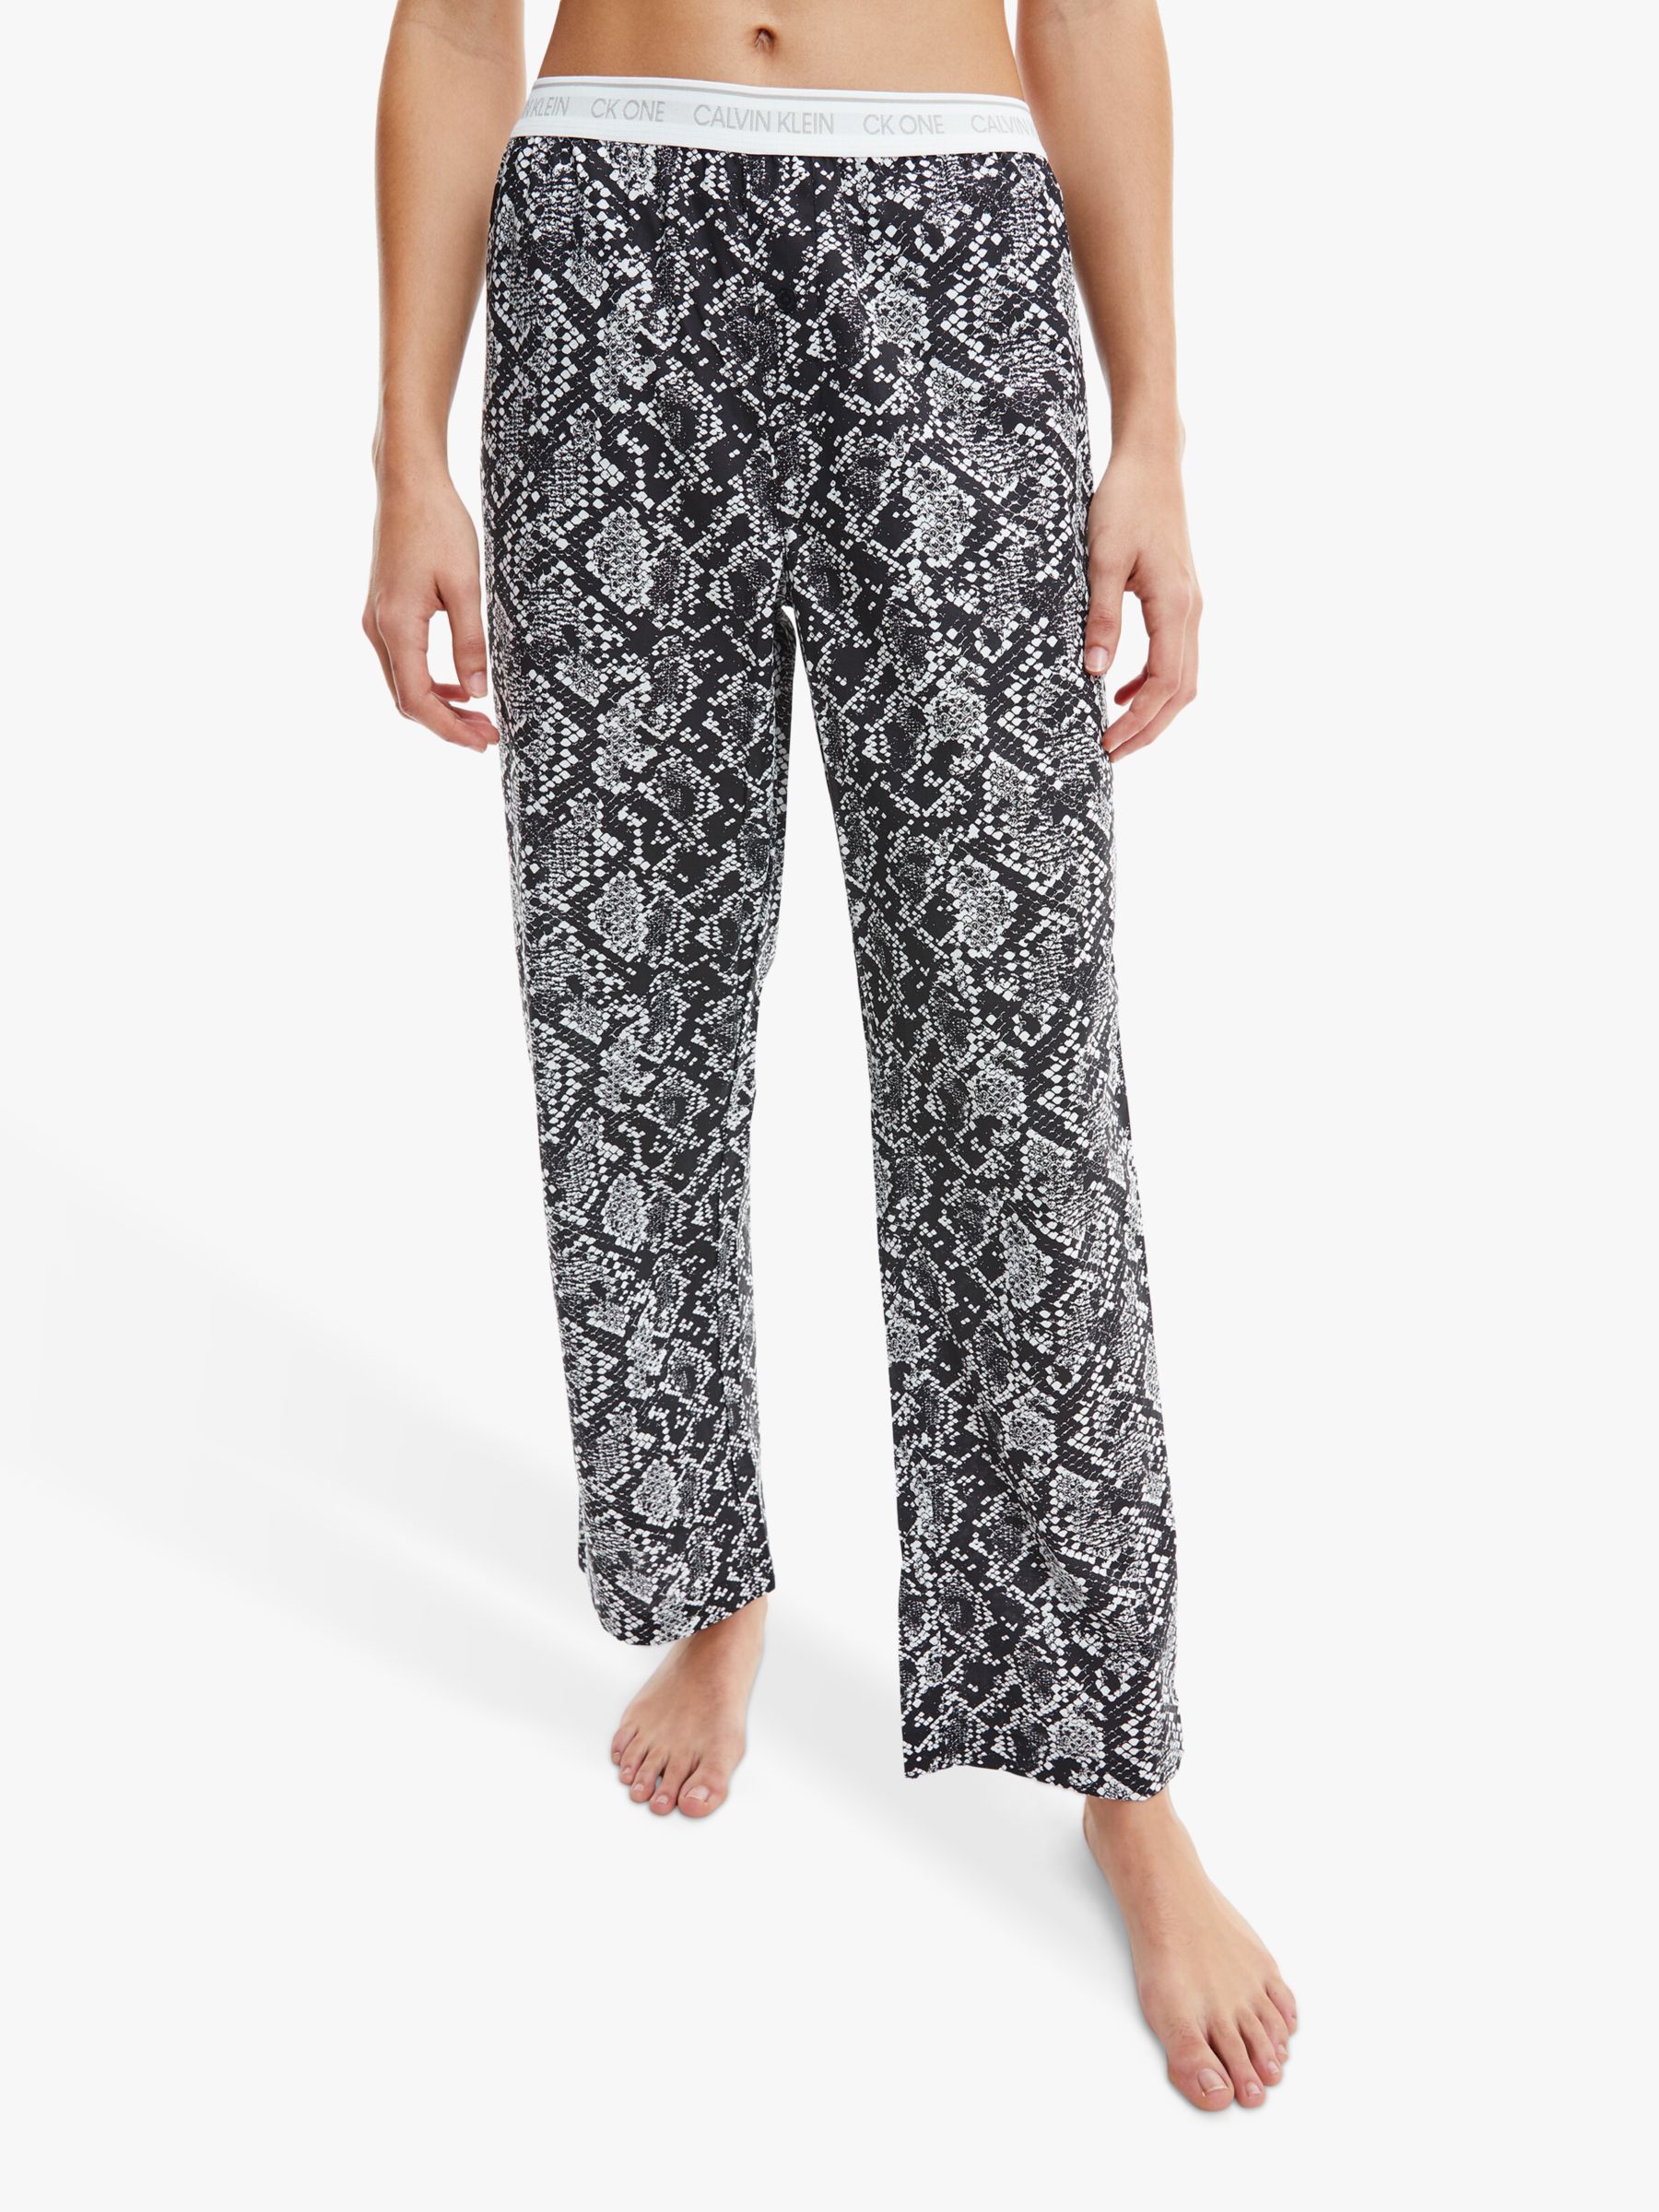 Calvin Klein Snake Print Pyjama Bottoms, Black